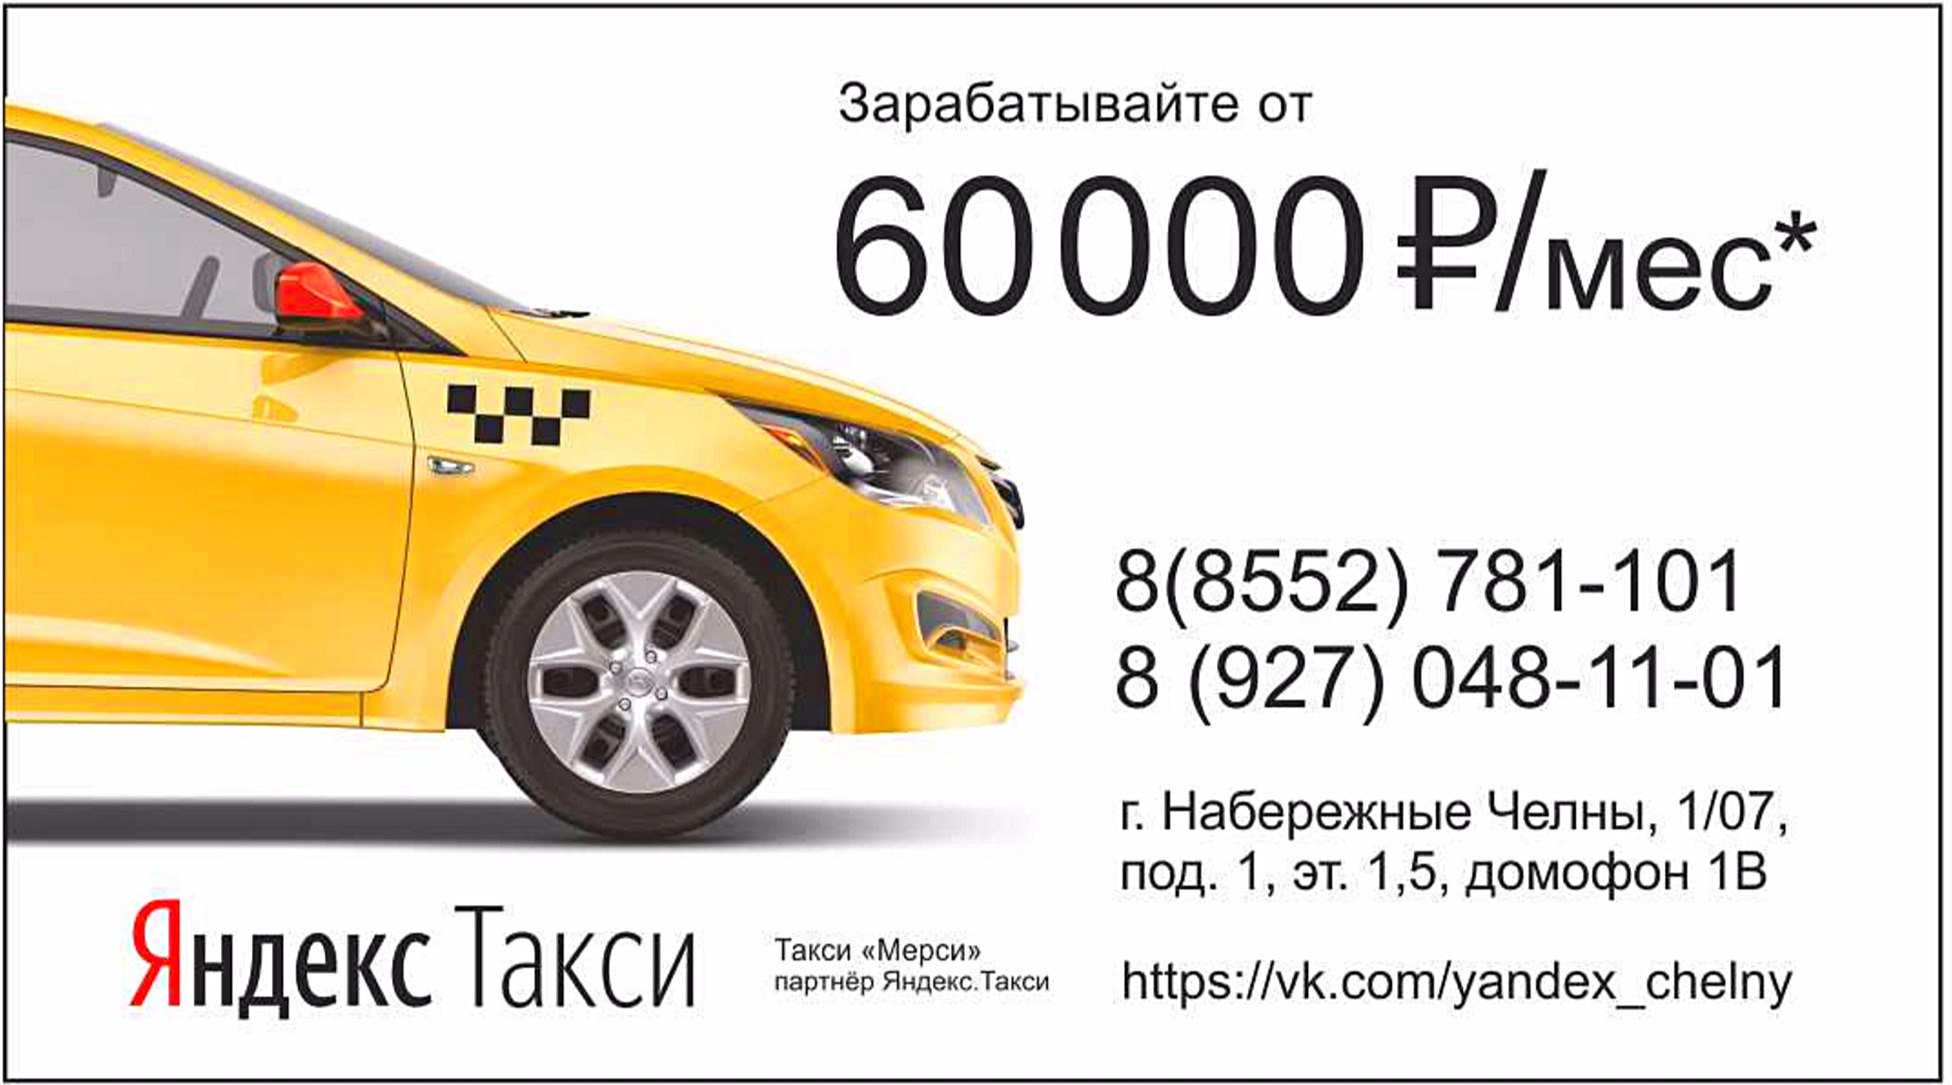 Визитки Яндекс такси